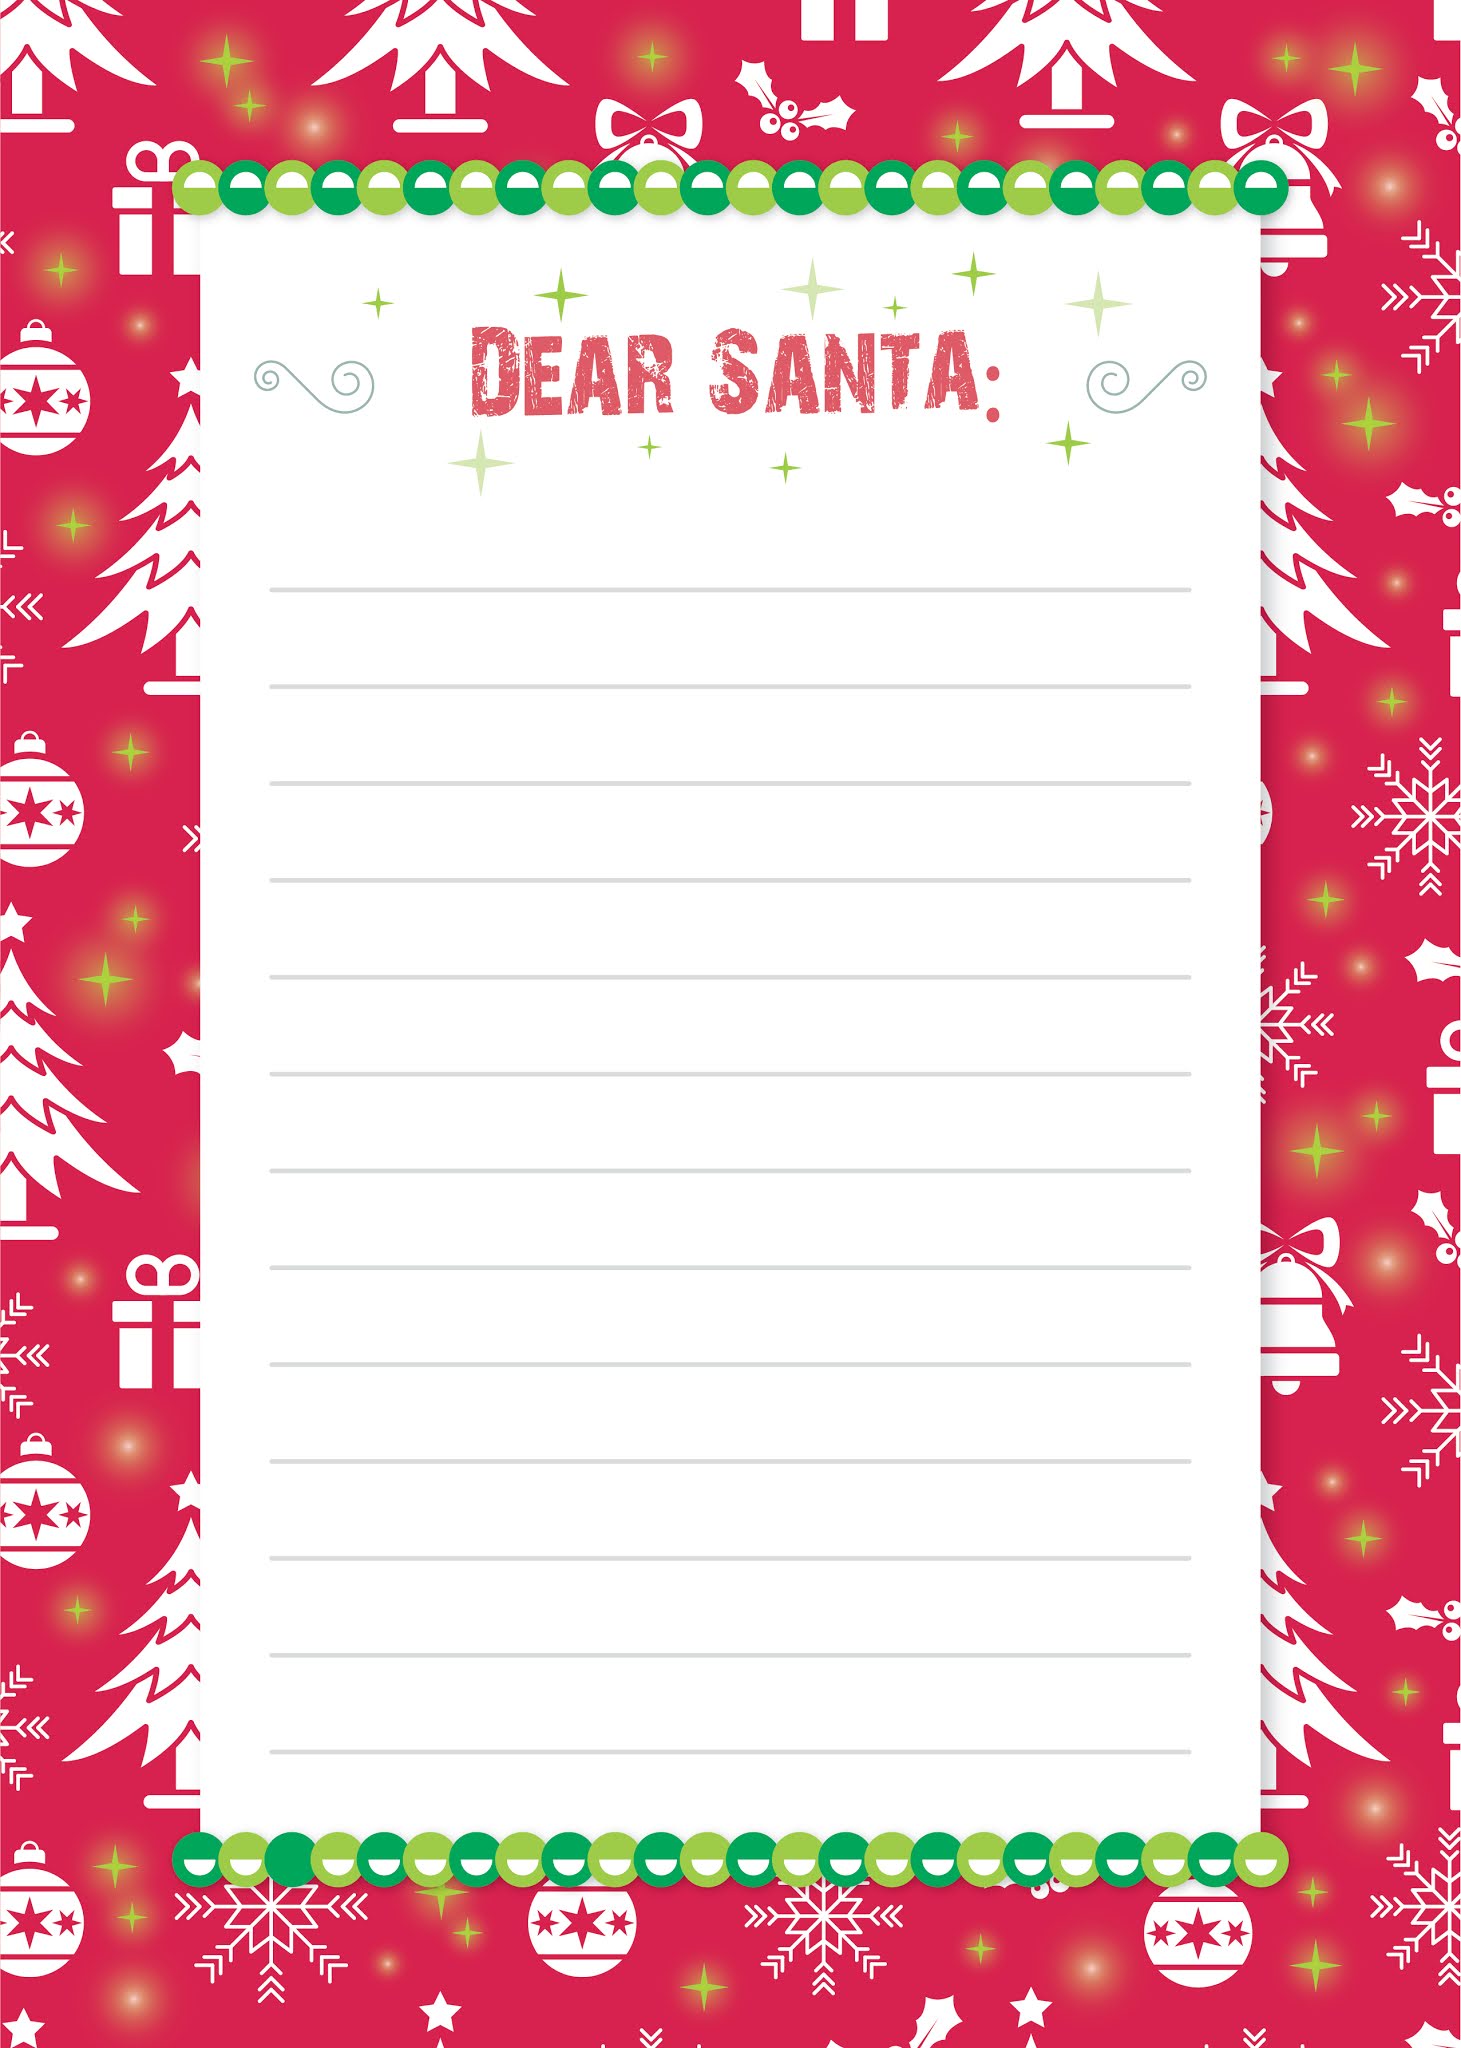 christmas-letter-templates-15-free-printable-christmas-wishes-letter-from-santa-claus-templates